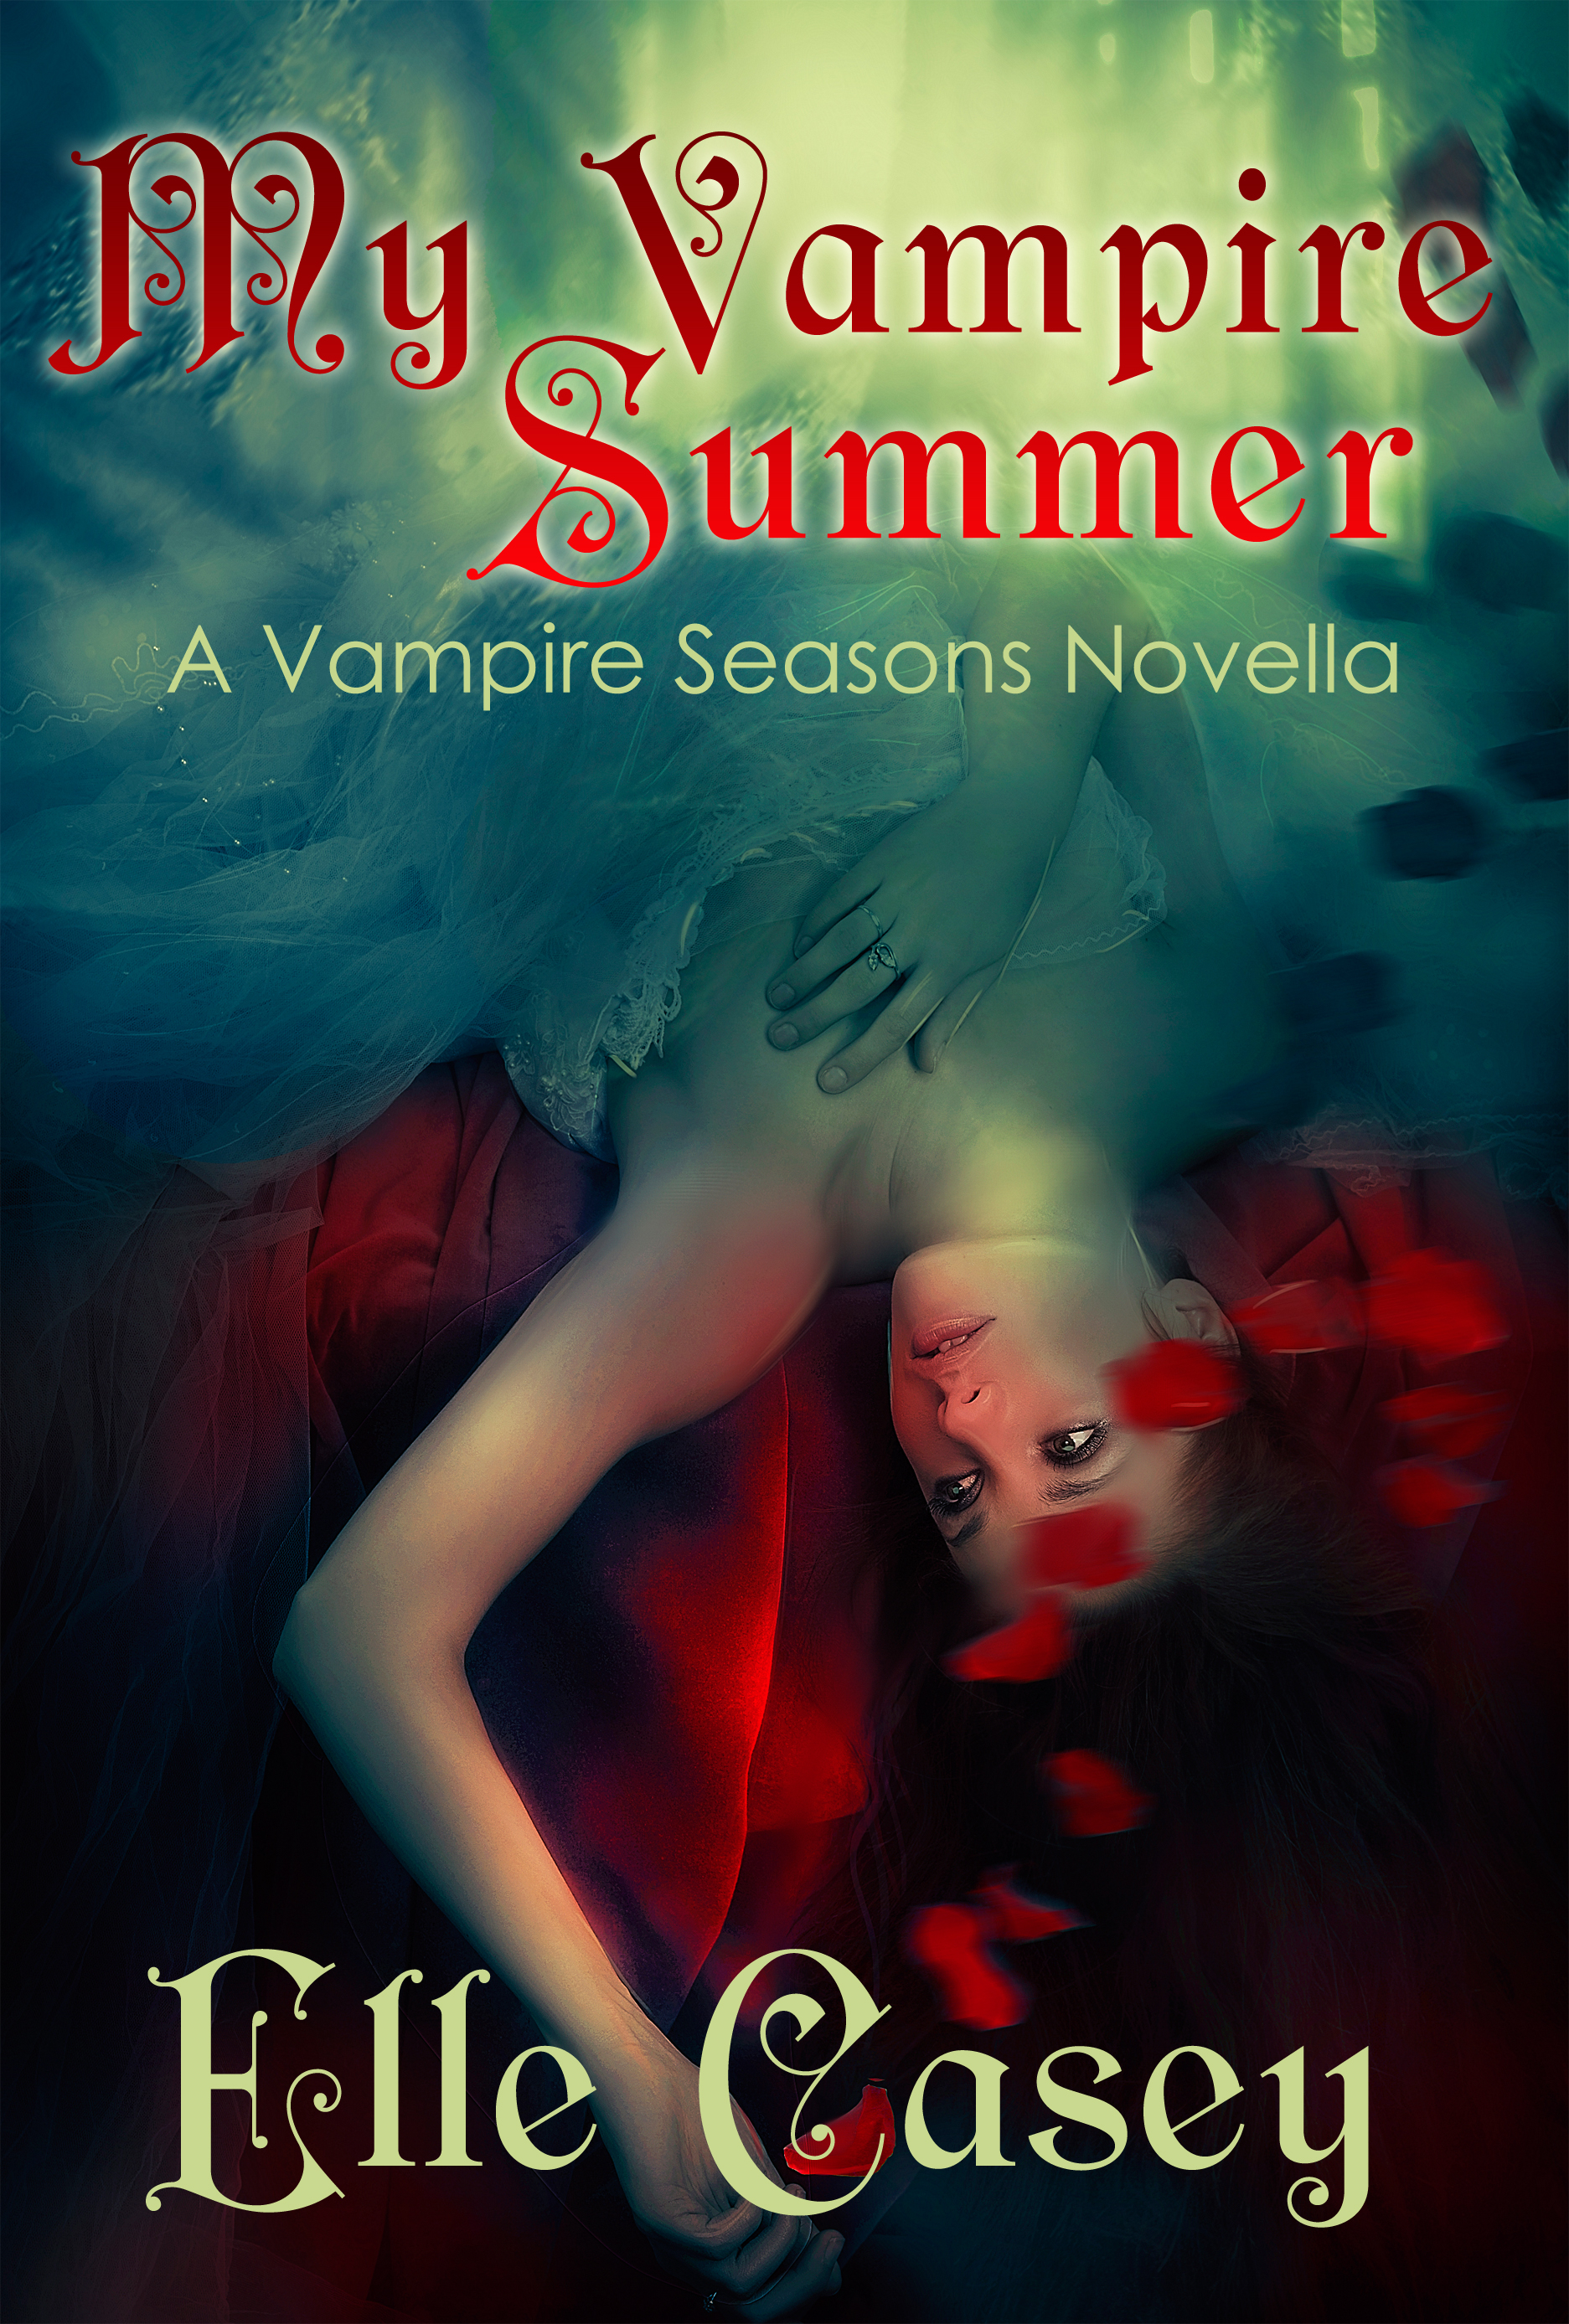 Vampire Seasons, 4-novella series